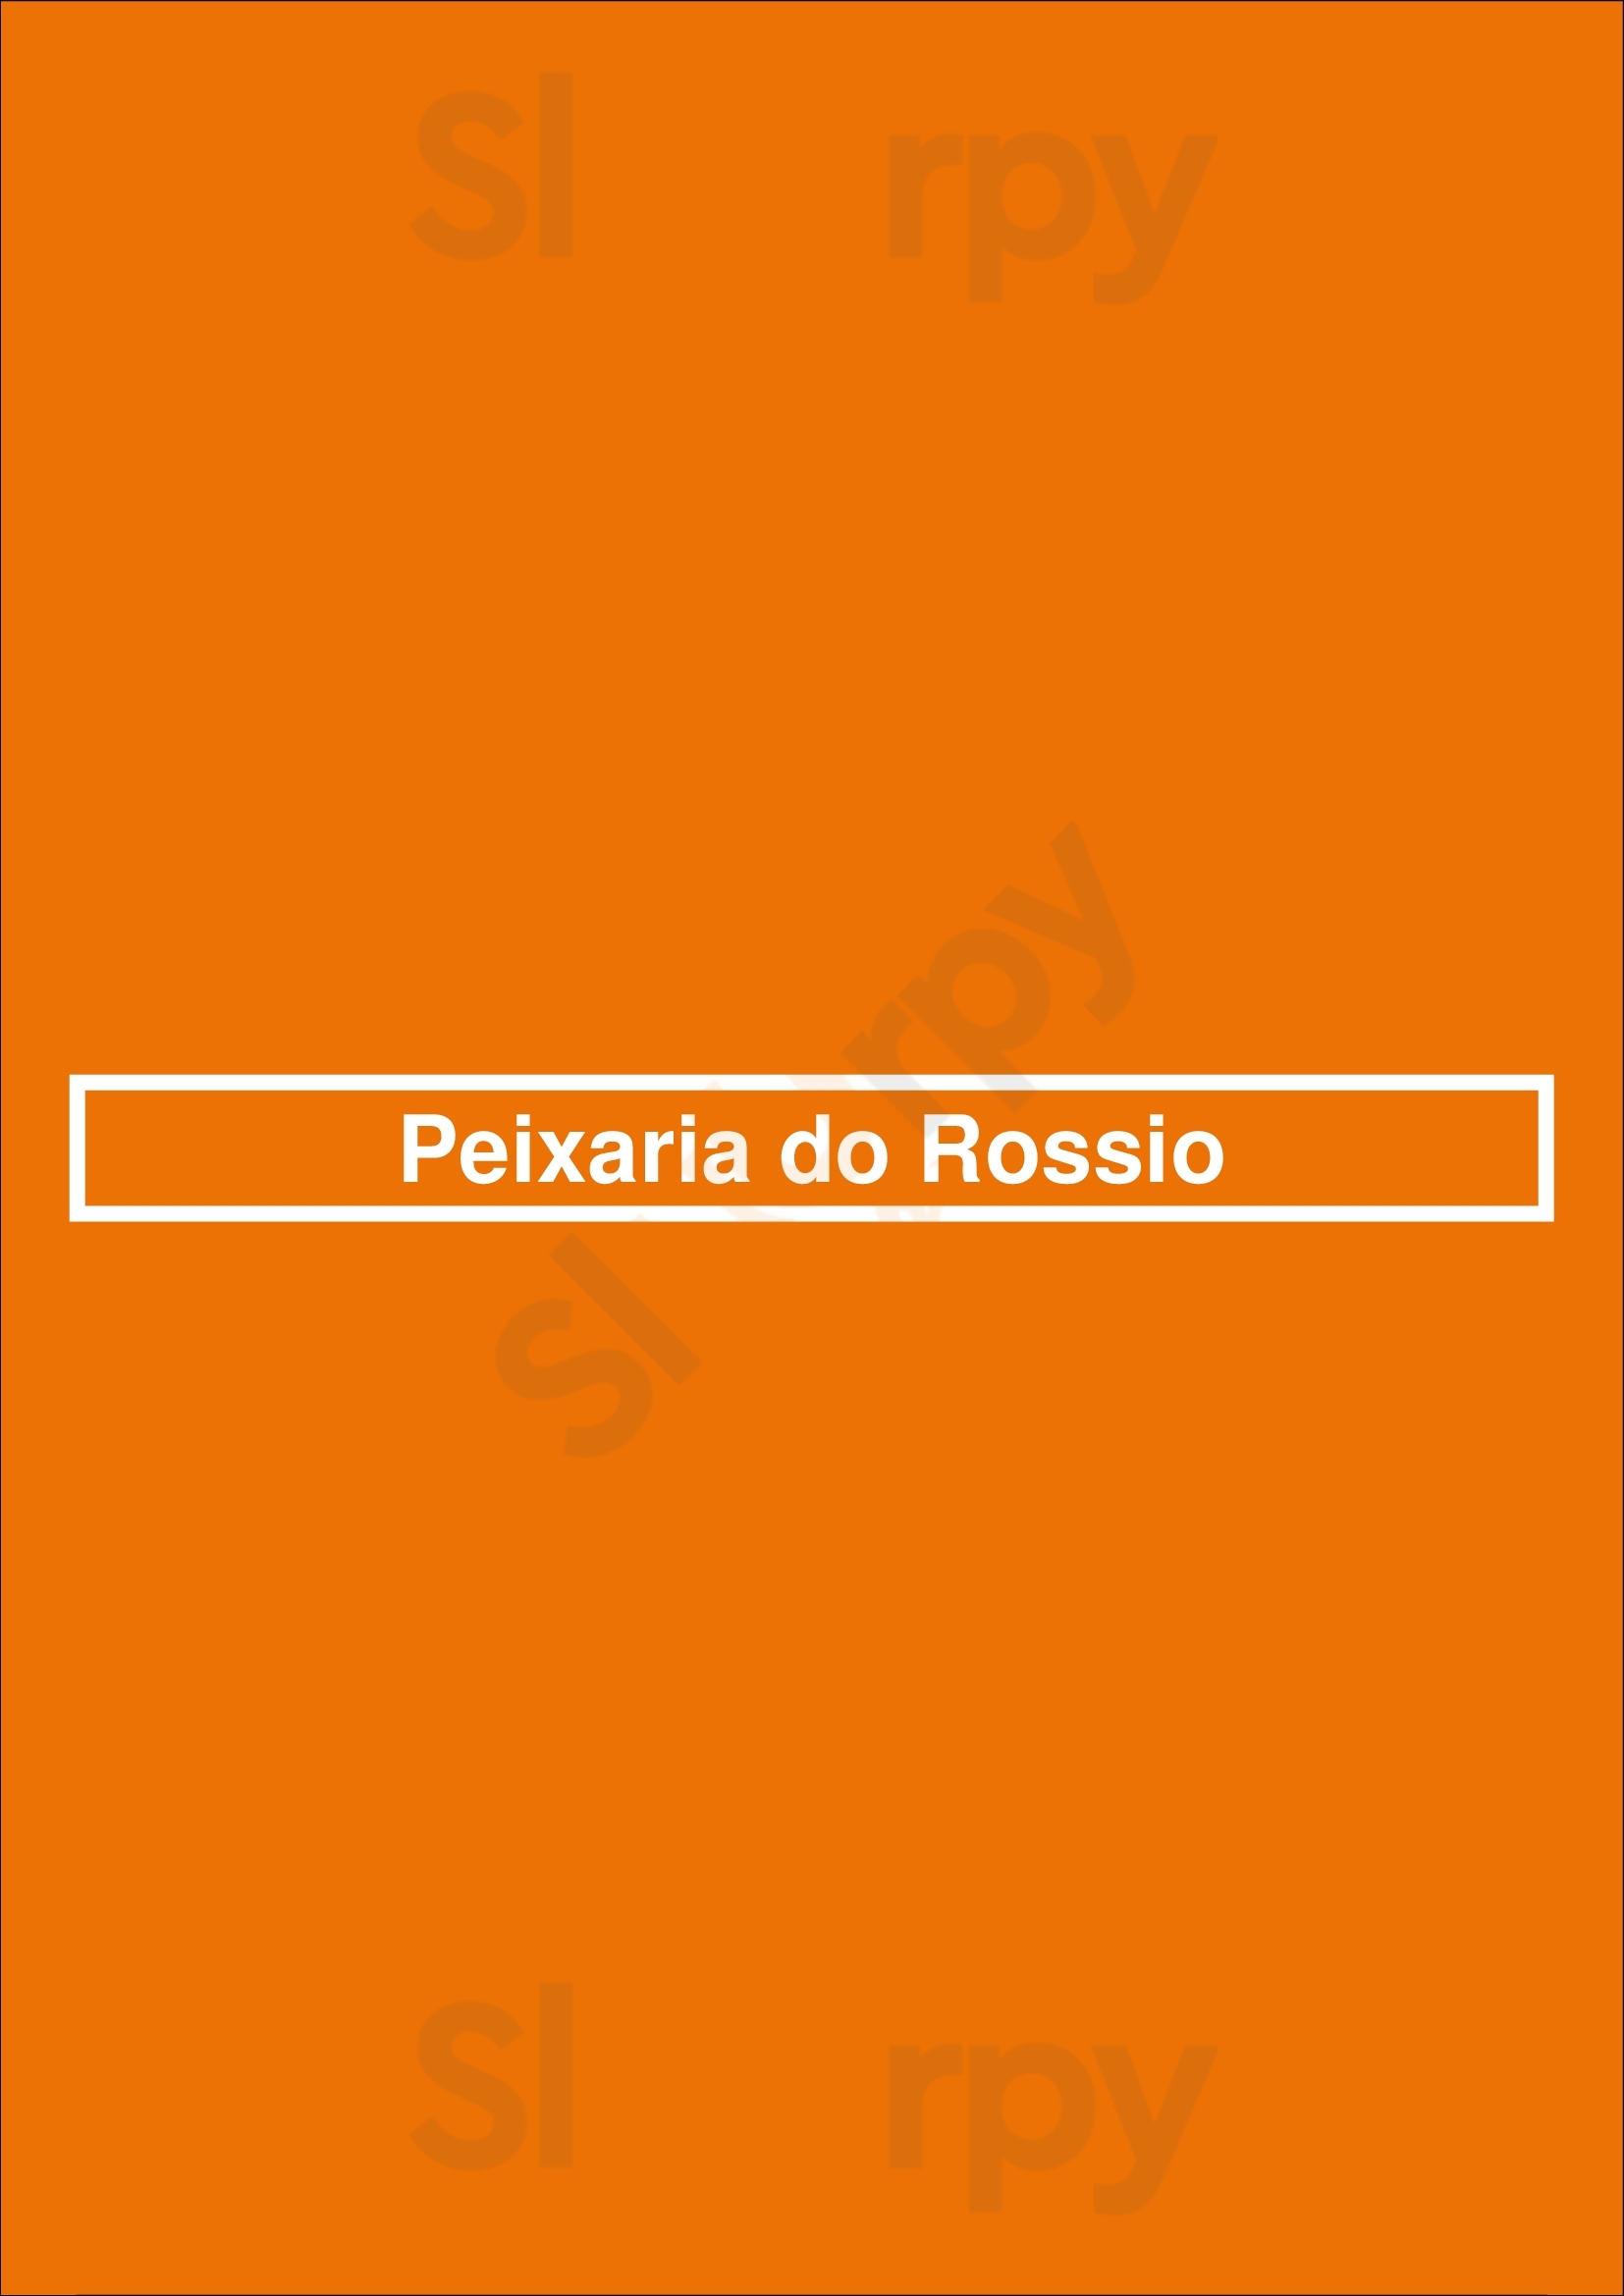 Peixaria Do Rossio Lisboa Menu - 1